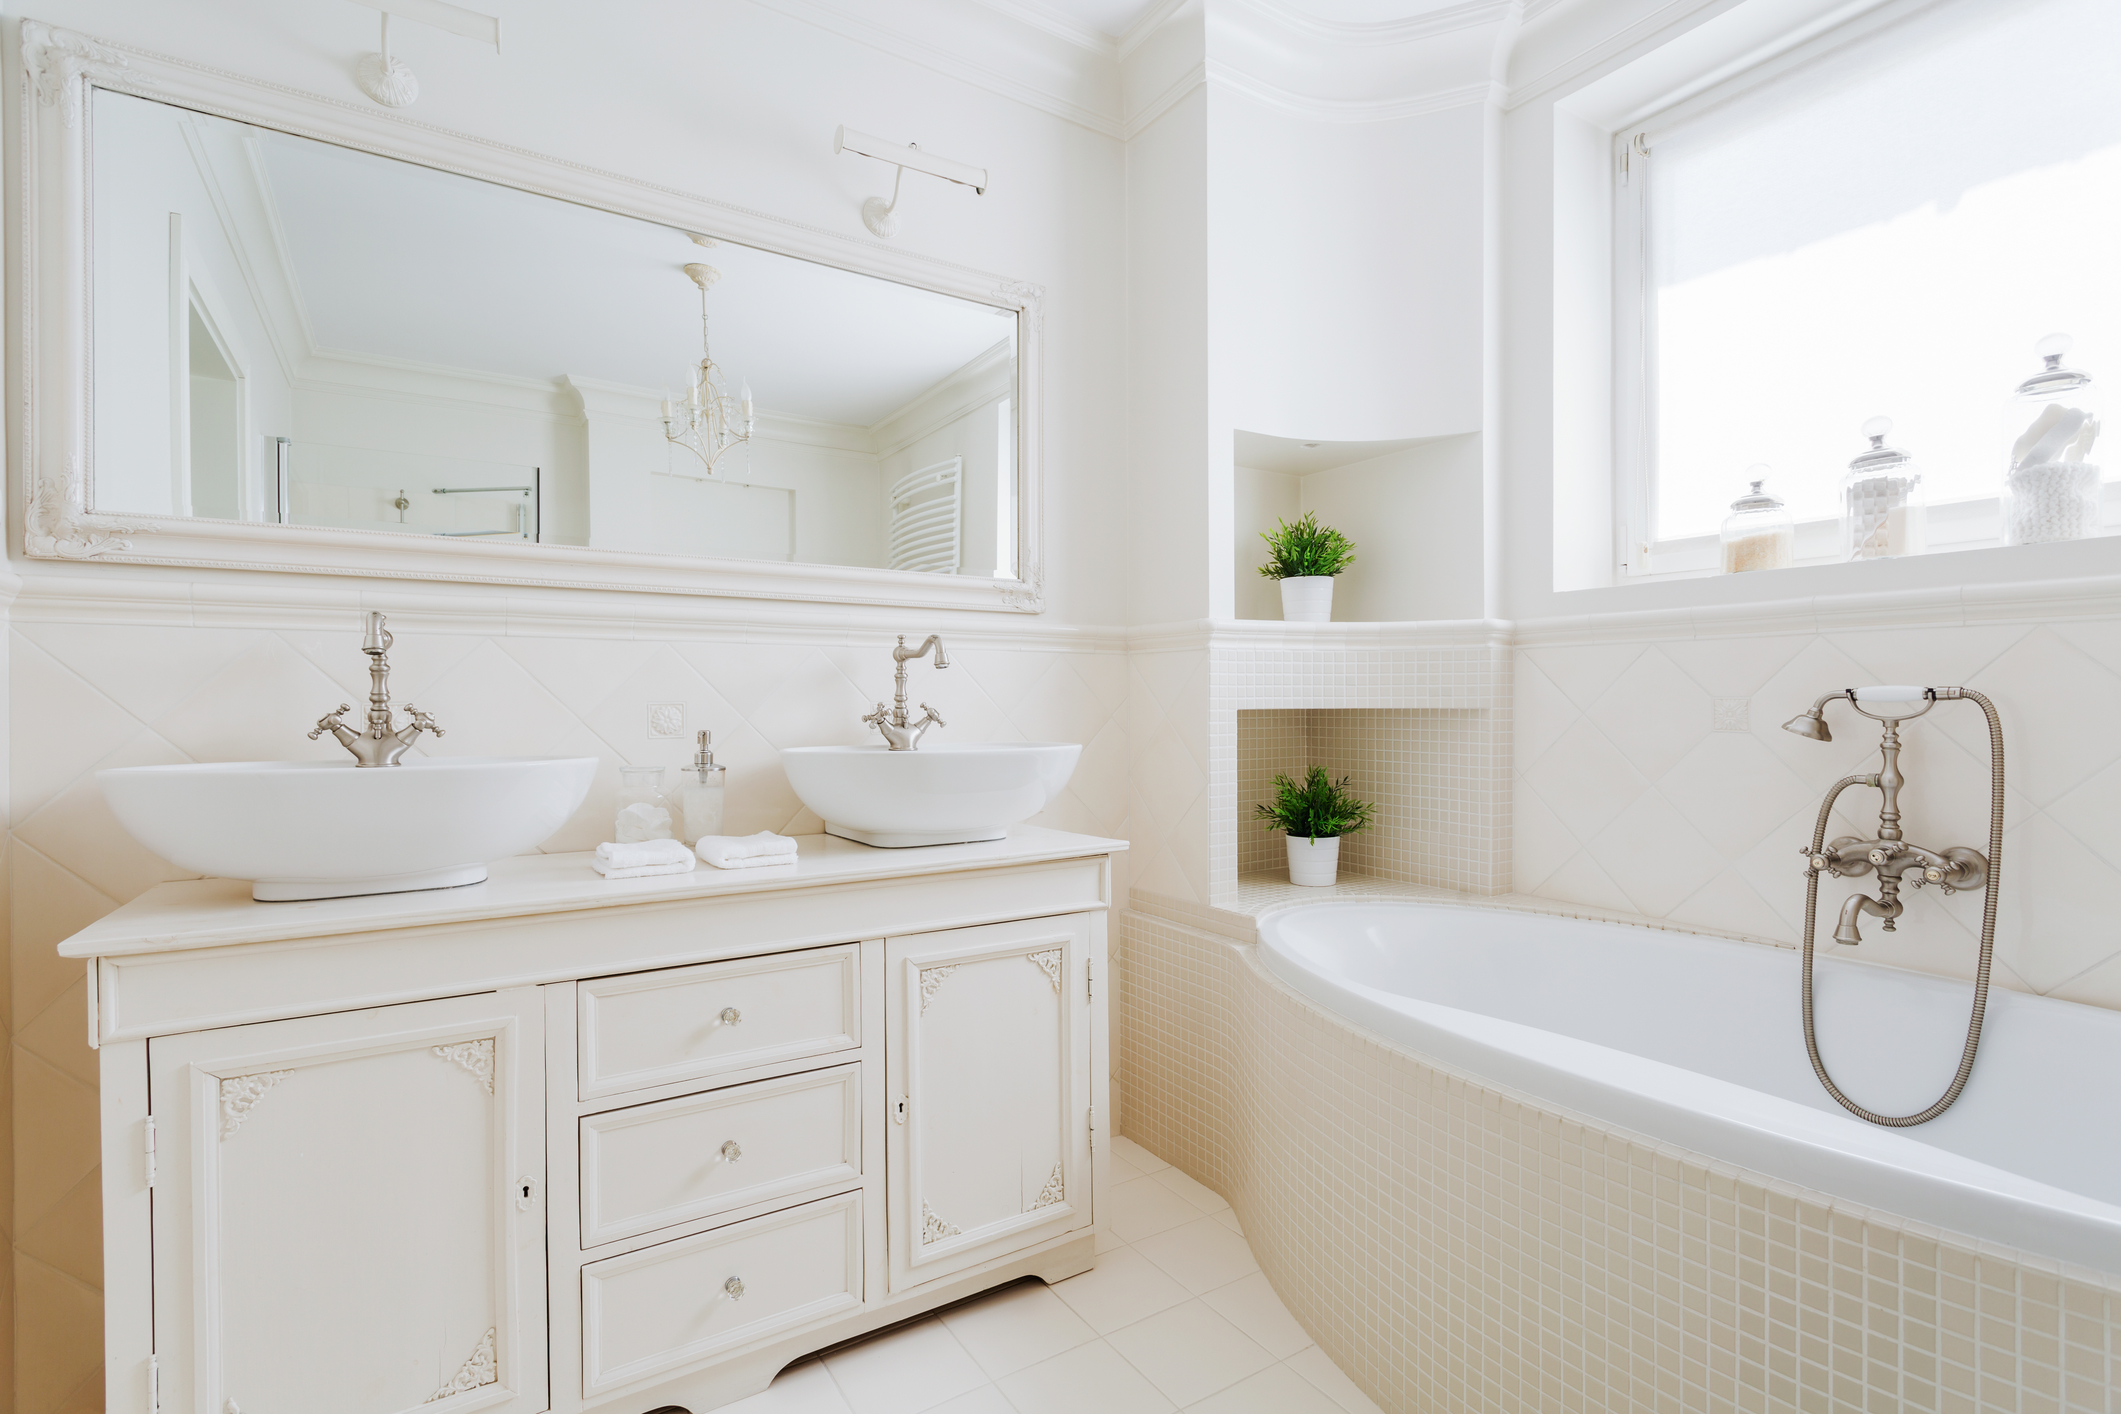 Elegant bathroom with white fittings